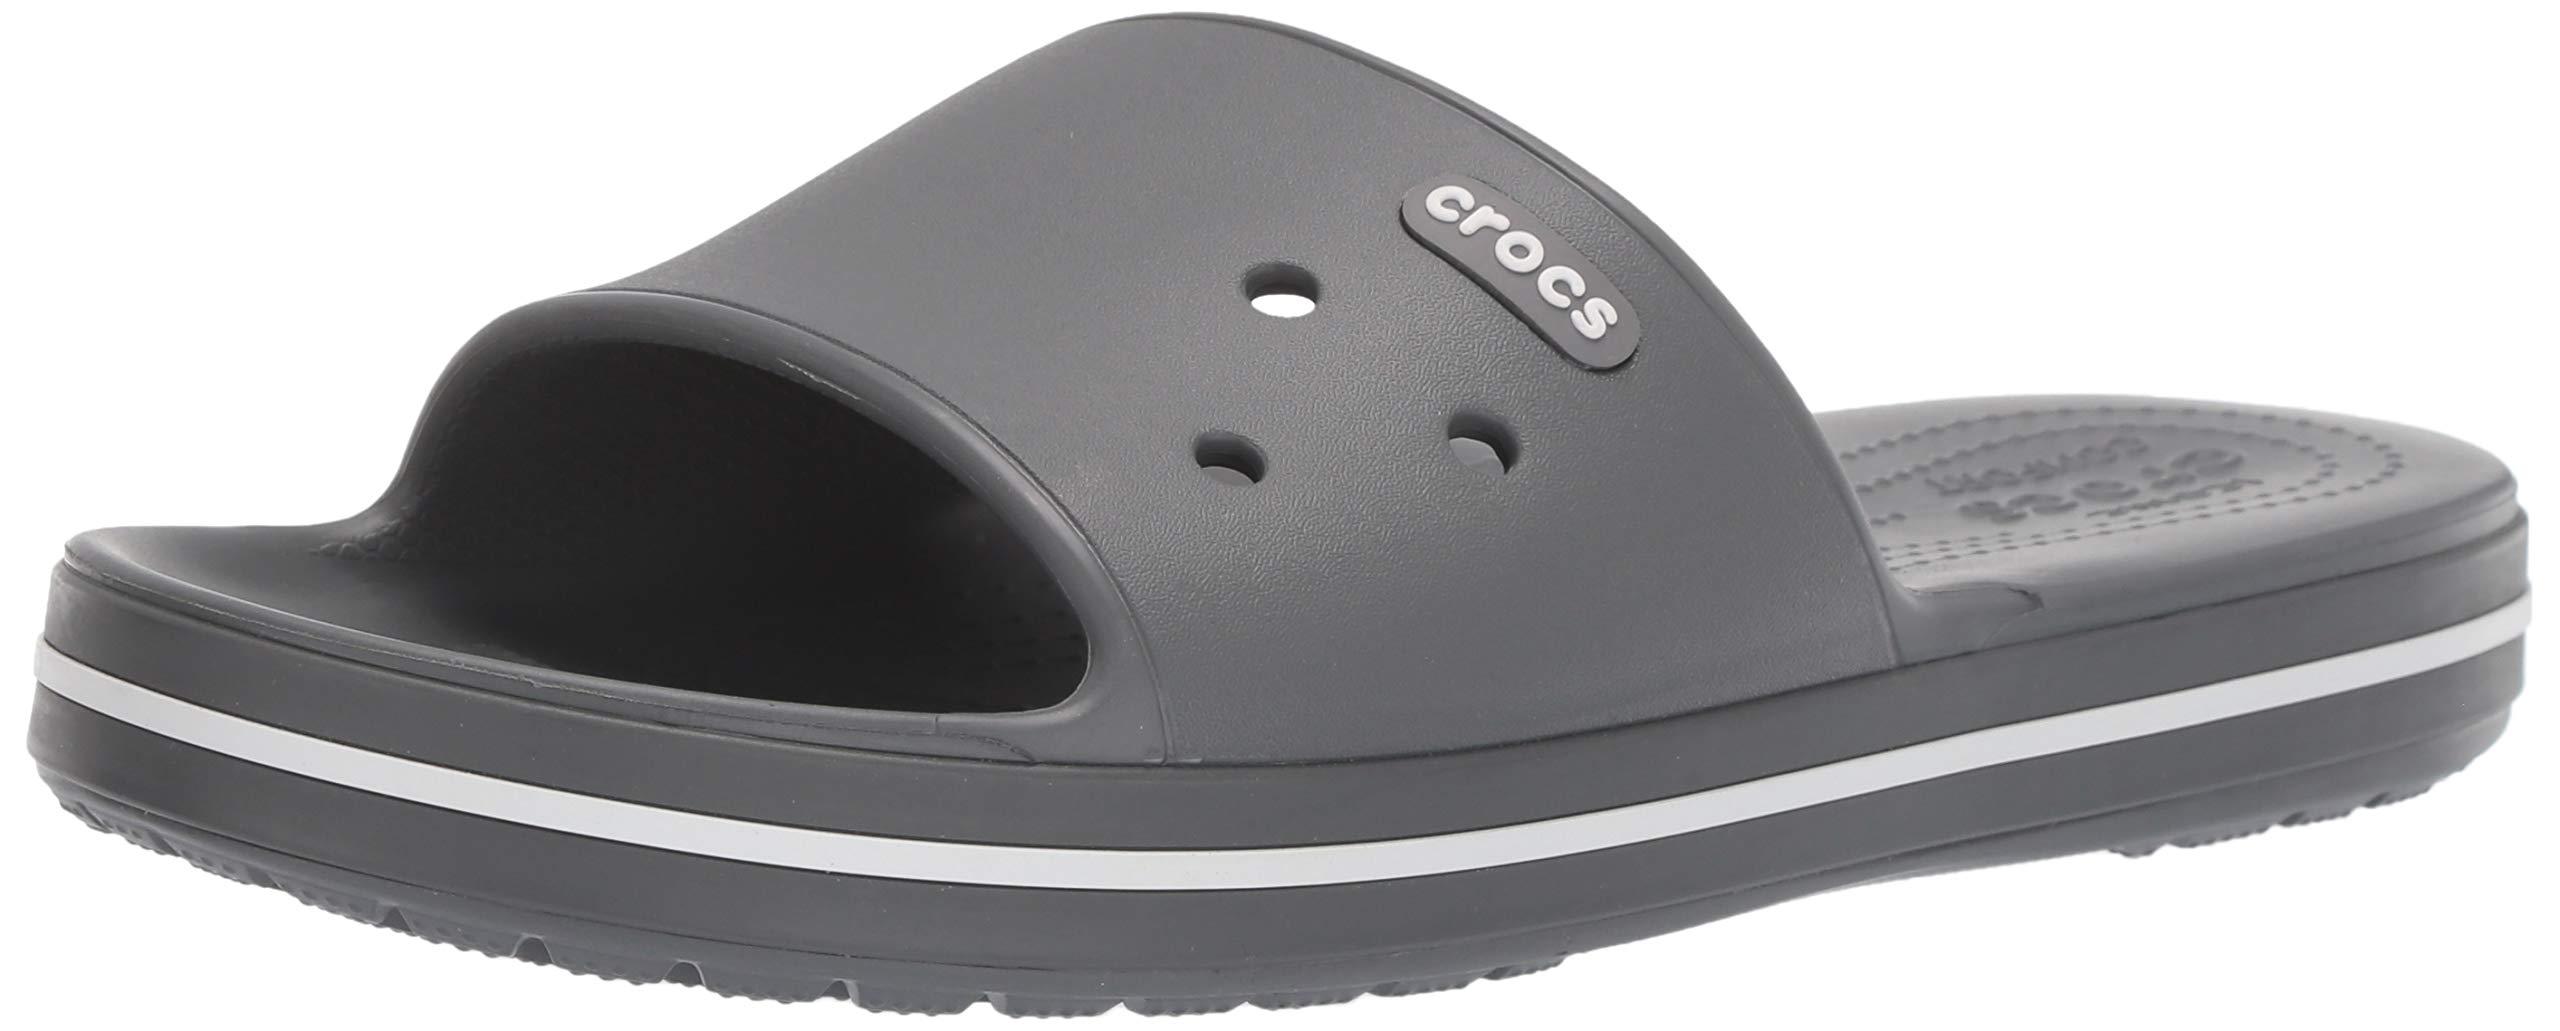 Crocs Crocband III Slide Sandale Badelatschen Slipper Pantoletten 205733-07I 